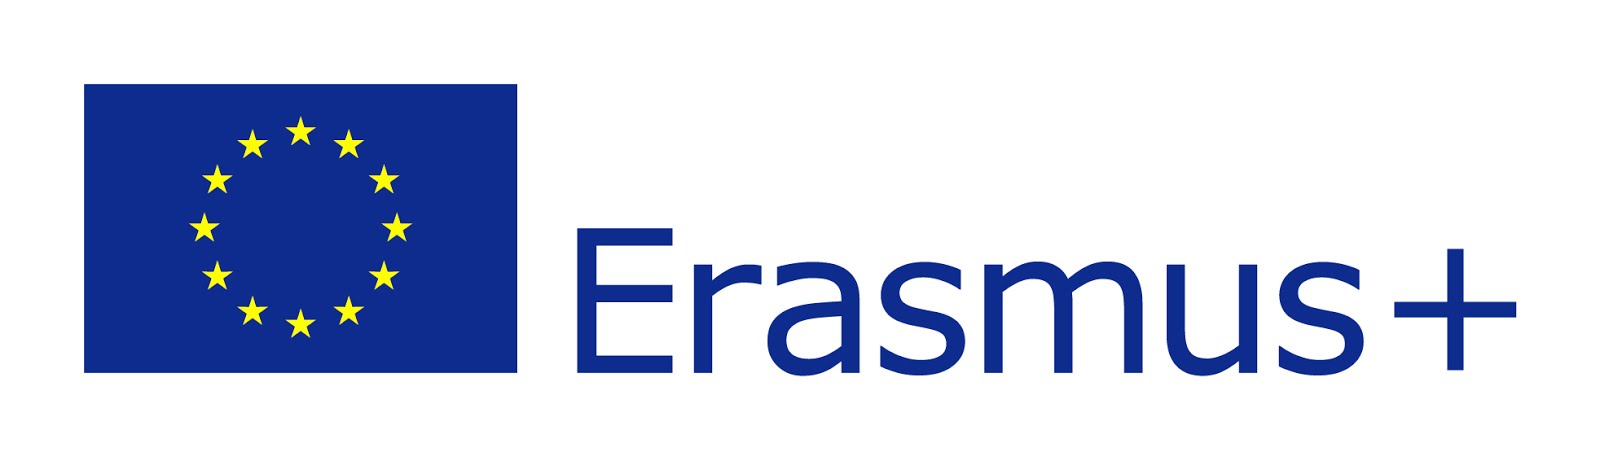 Proyecto Erasmus